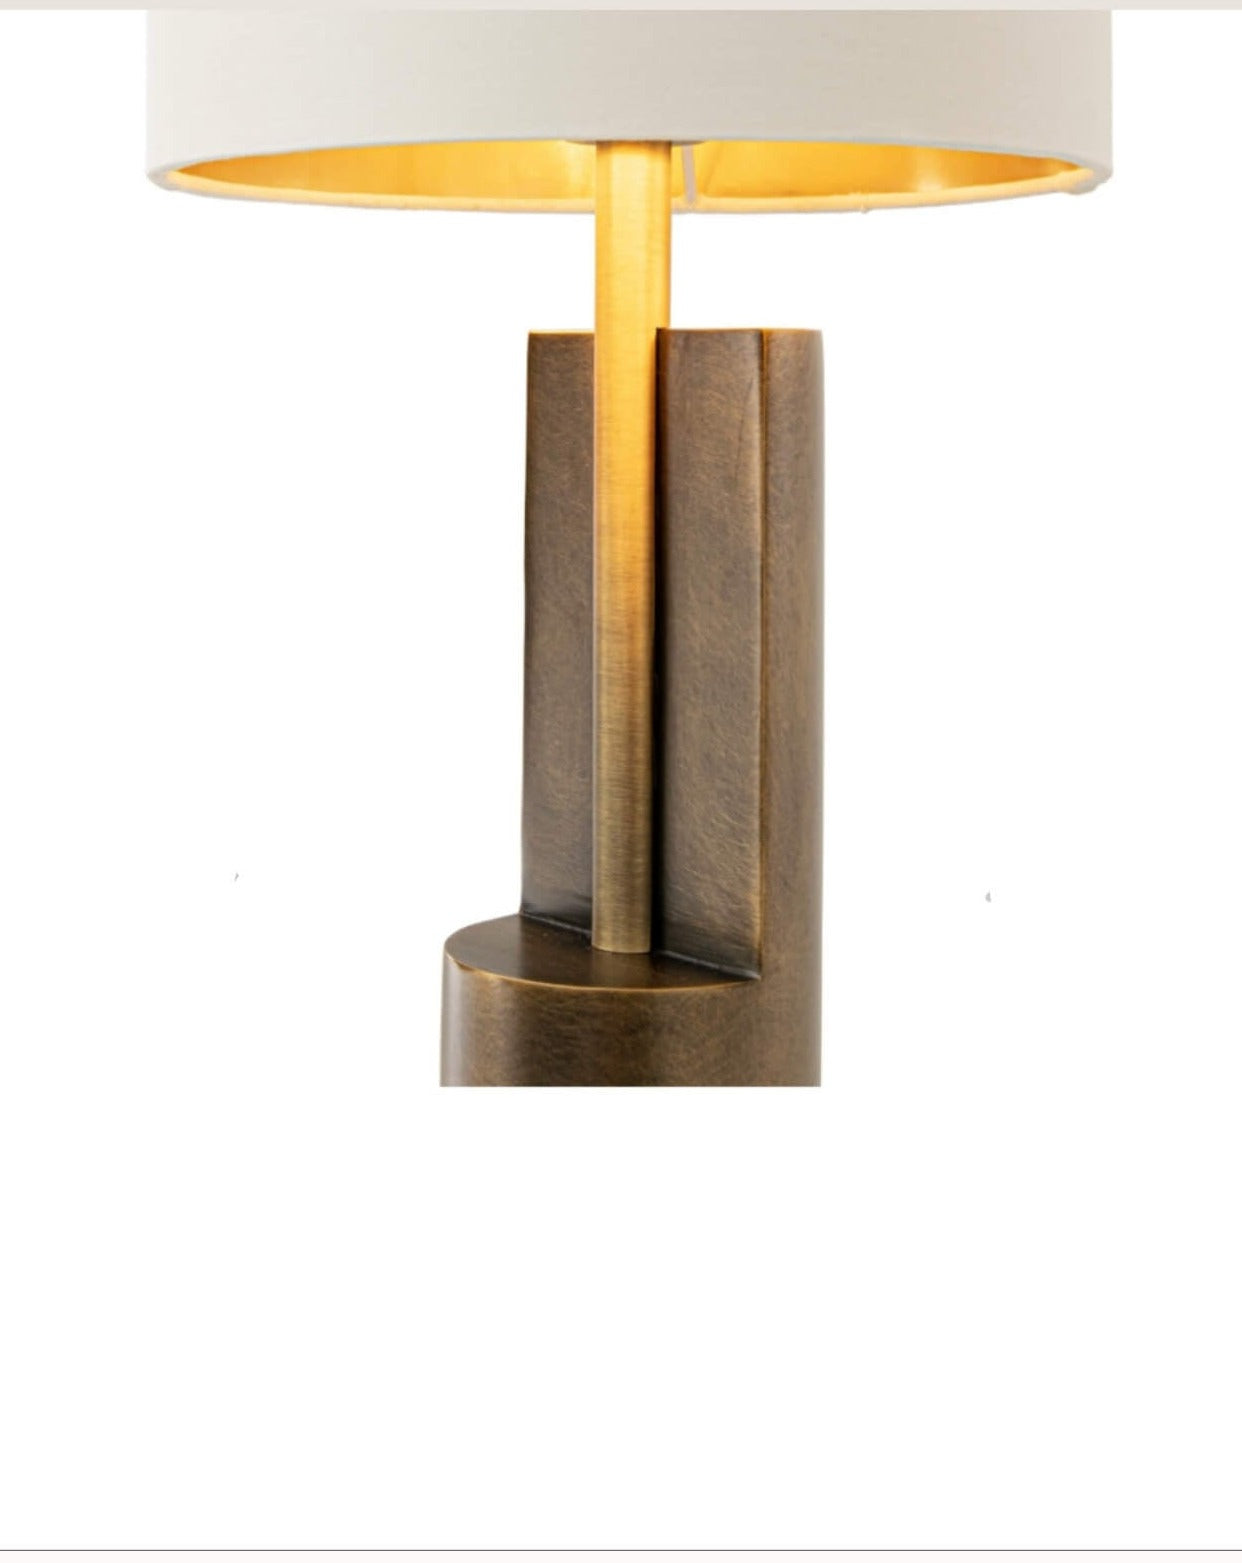 Opal Brass Table Lamp